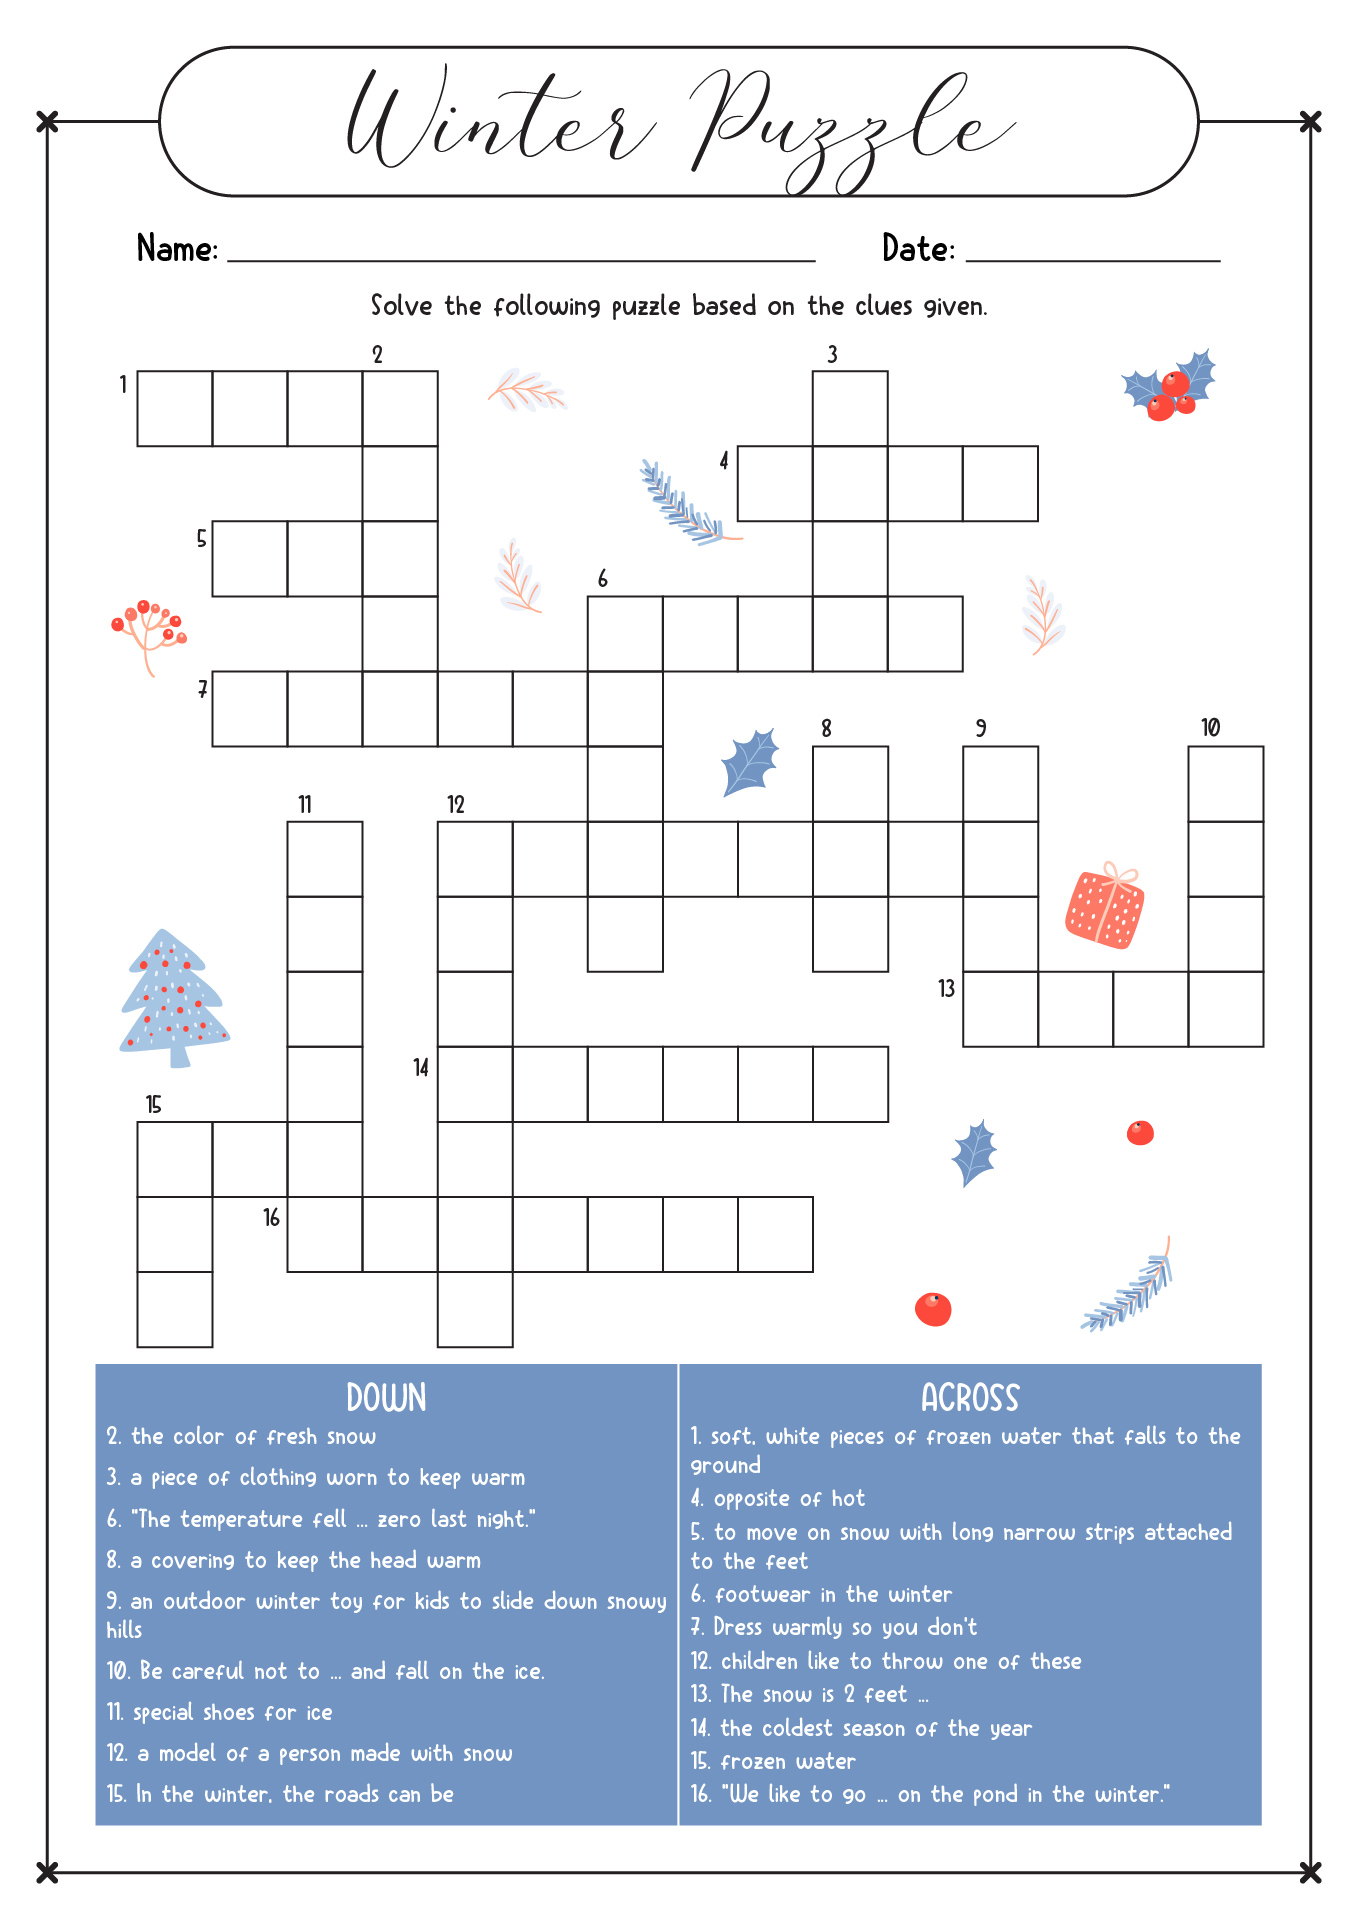 12 Best Images of Winter Puzzle Worksheets Kid Winter Crossword